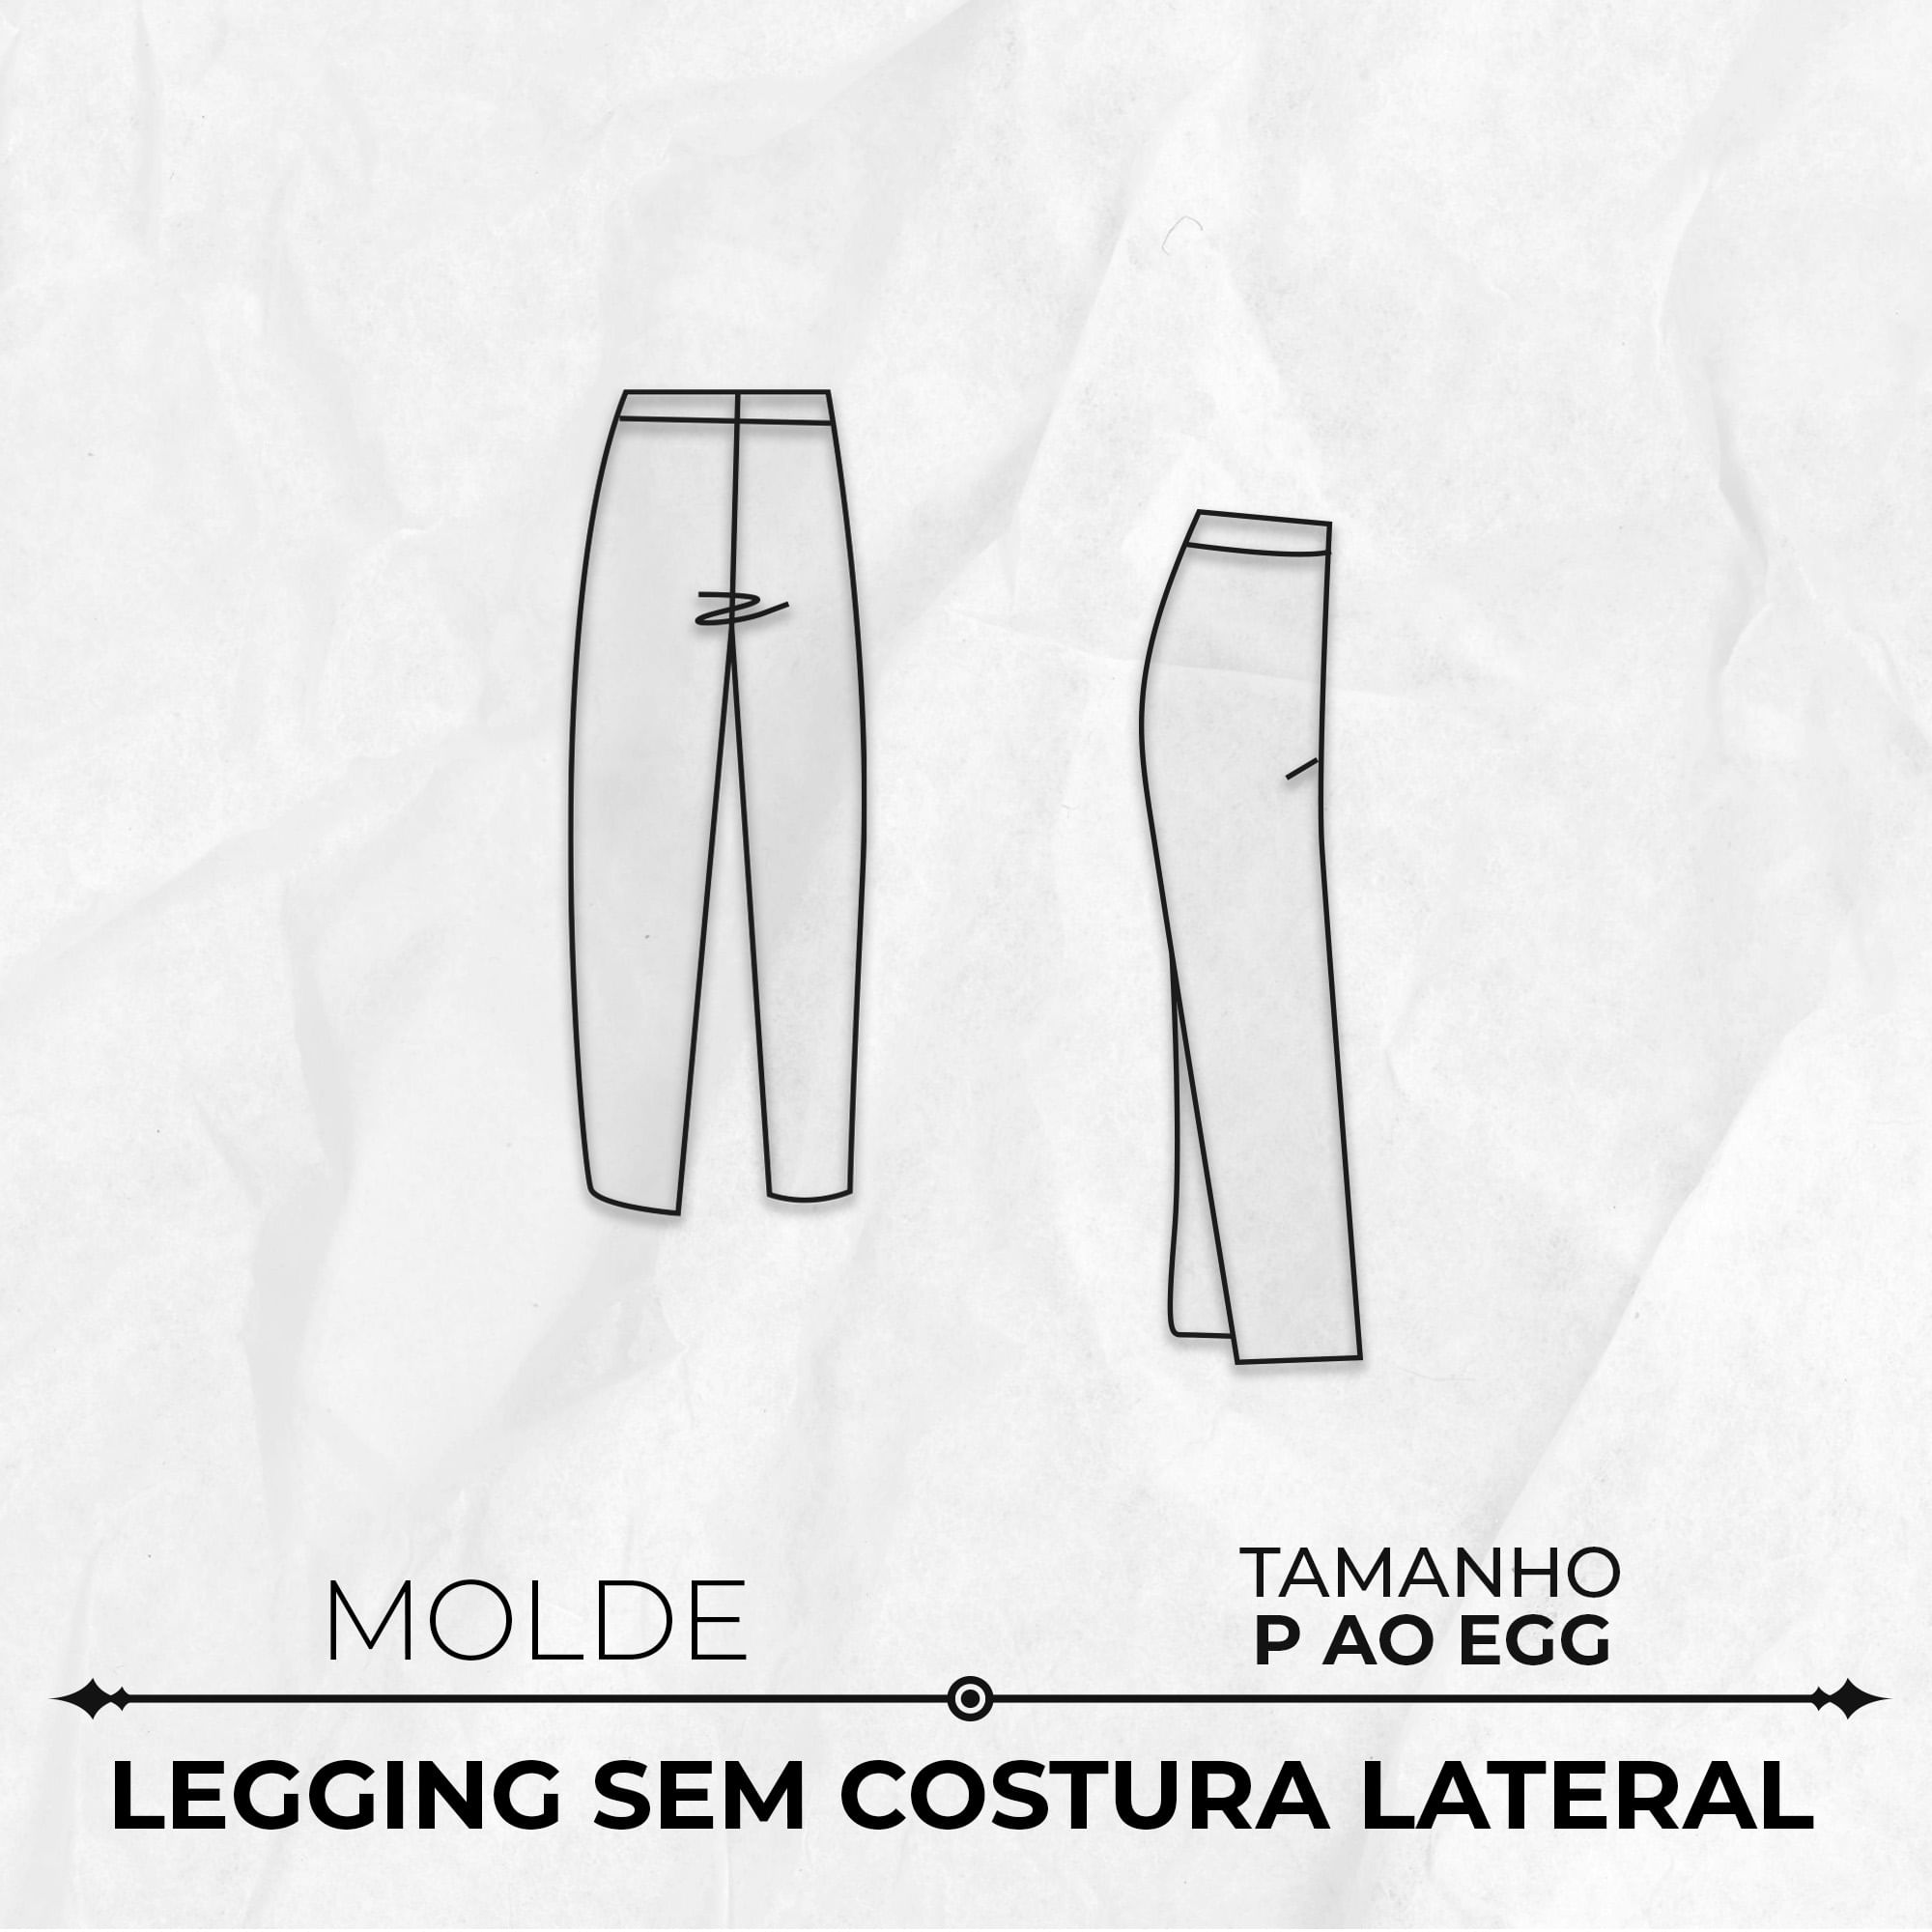 Molde-legging-sem-costura-lateral-P-ao-EGG-Ref-13609-1